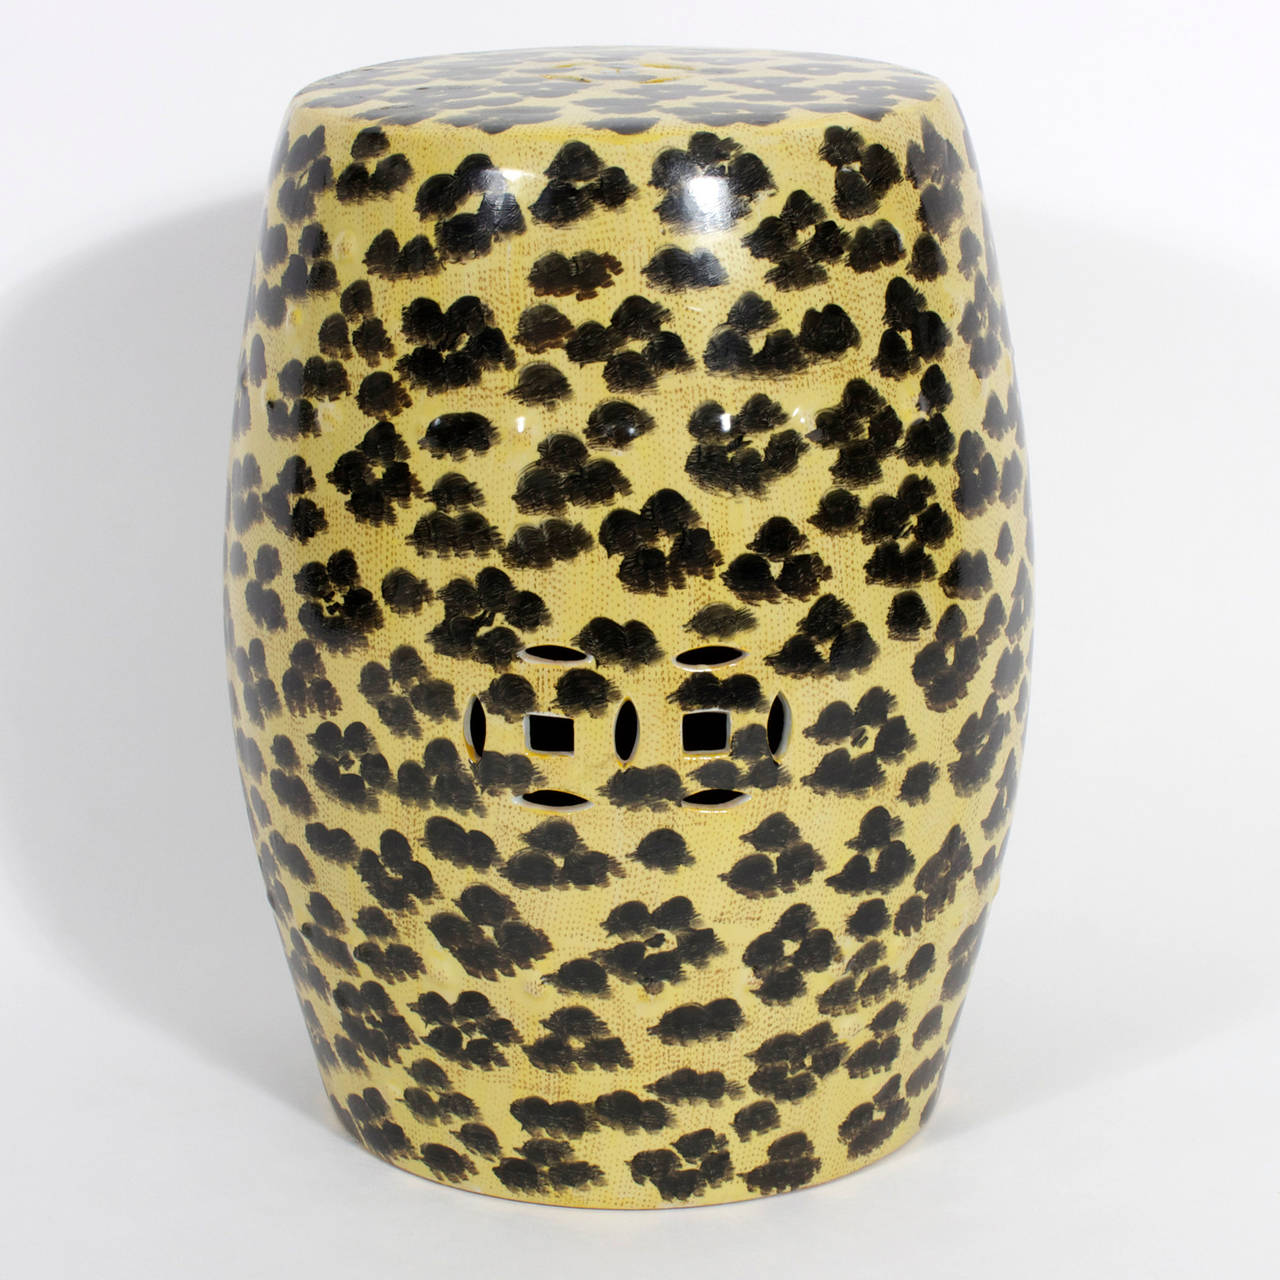 Italian Stylish Leopard Print Ceramic Garden Seat